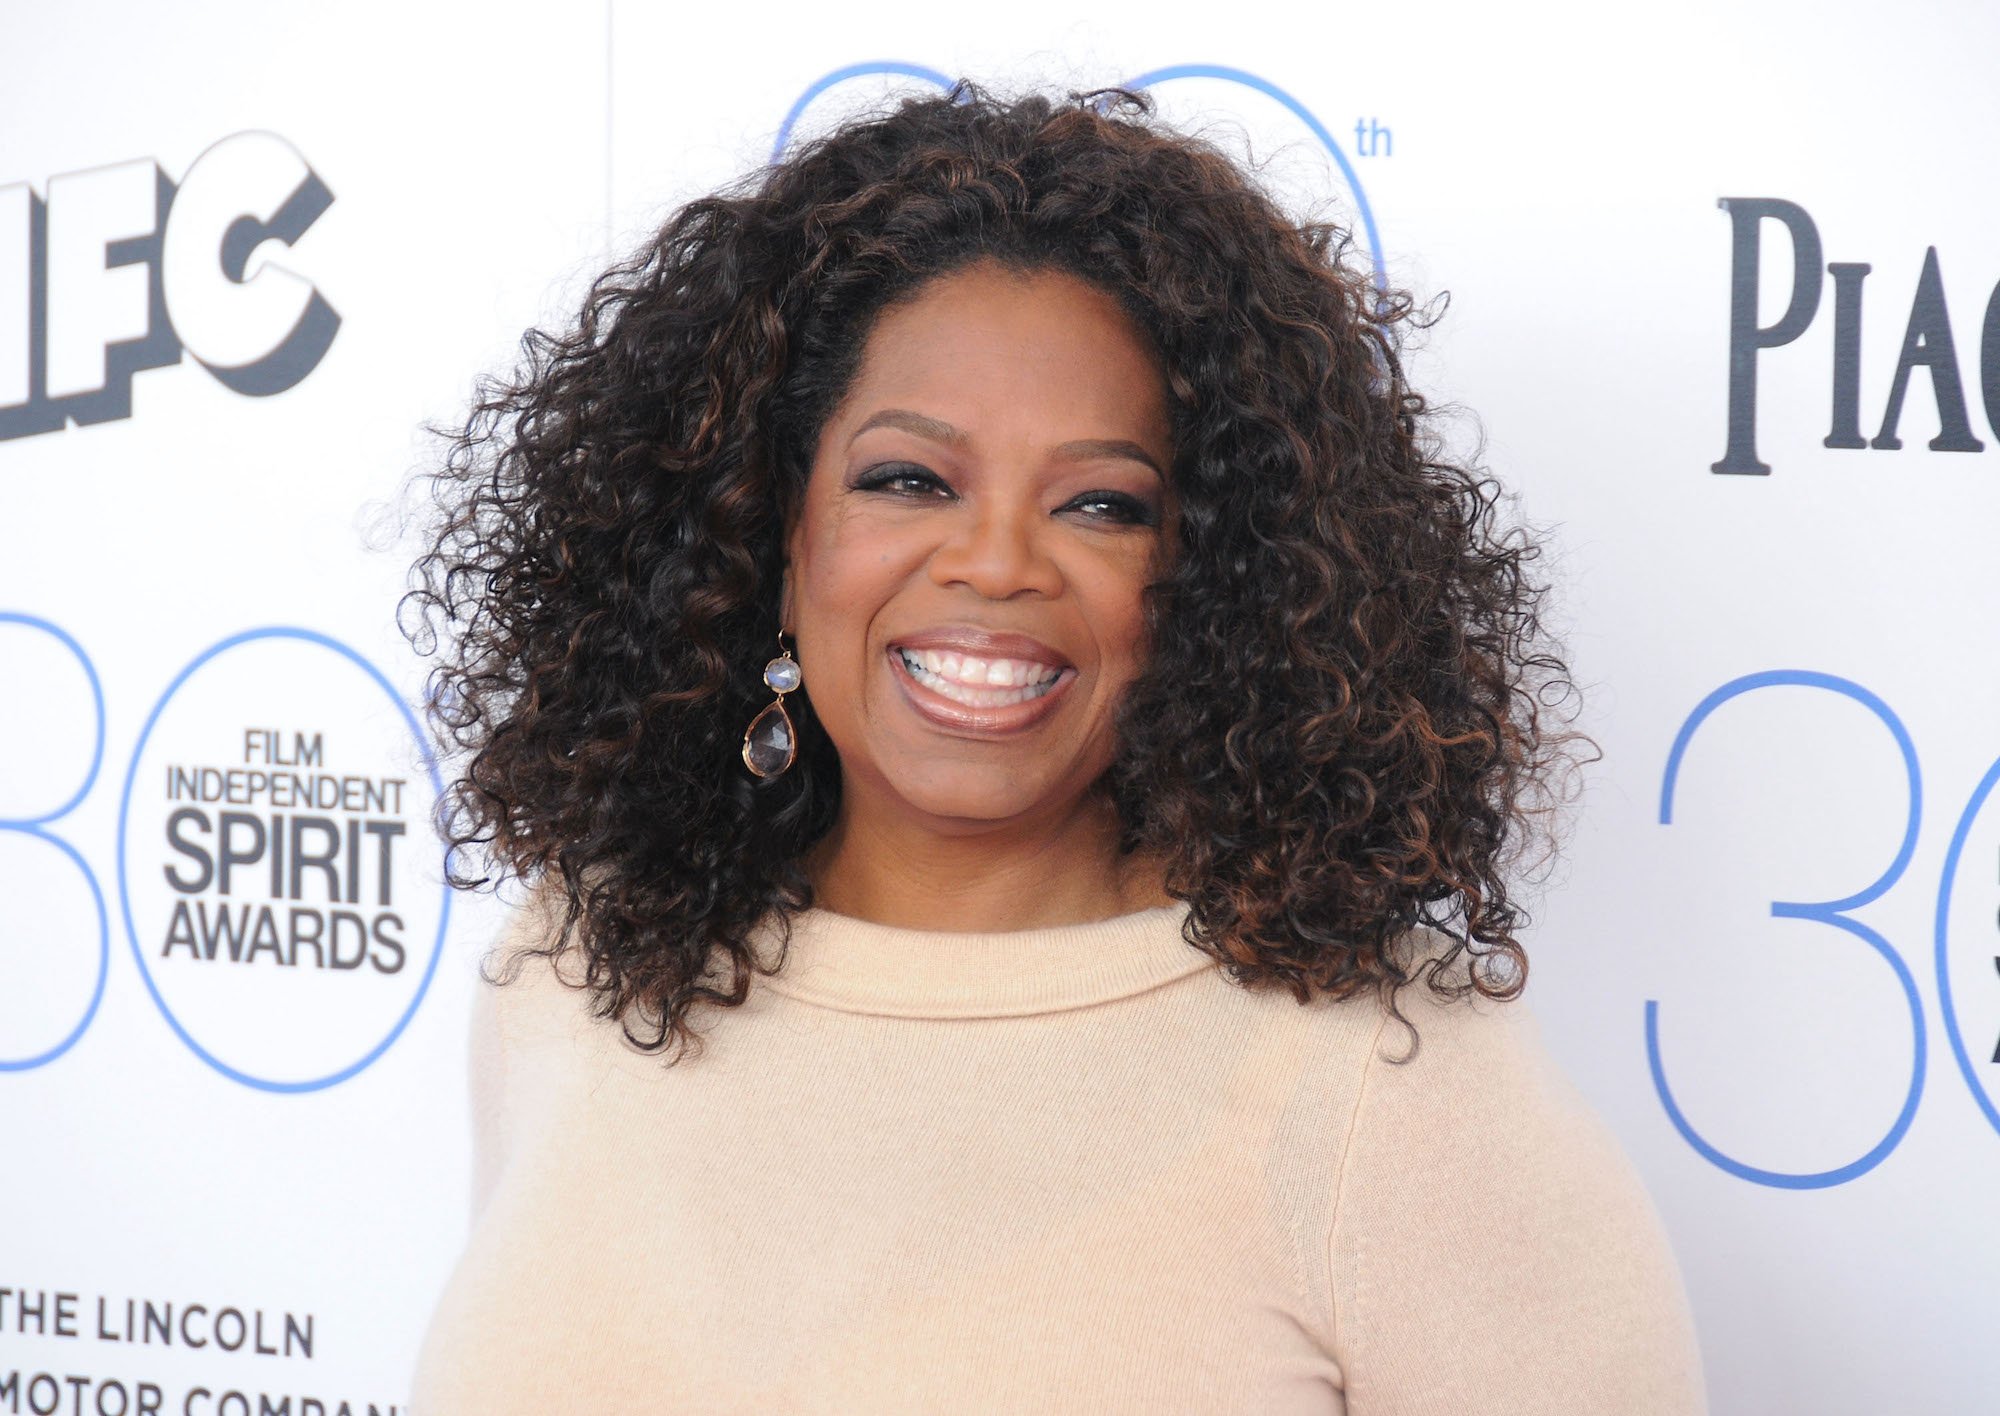 Oprah Winfrey attending the 2015 Film Independent Spirit Awards